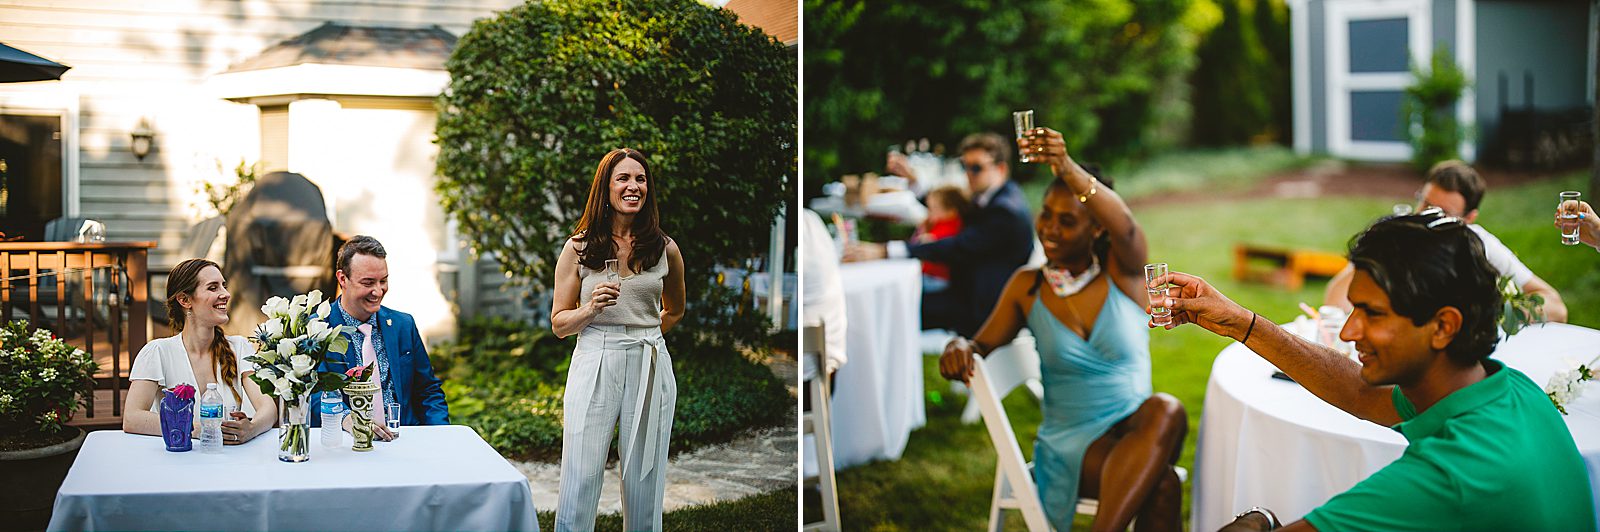 29 speeches at back yard wedding in chicago - Amazing Wedding in Backyard // Kristen + Jeff